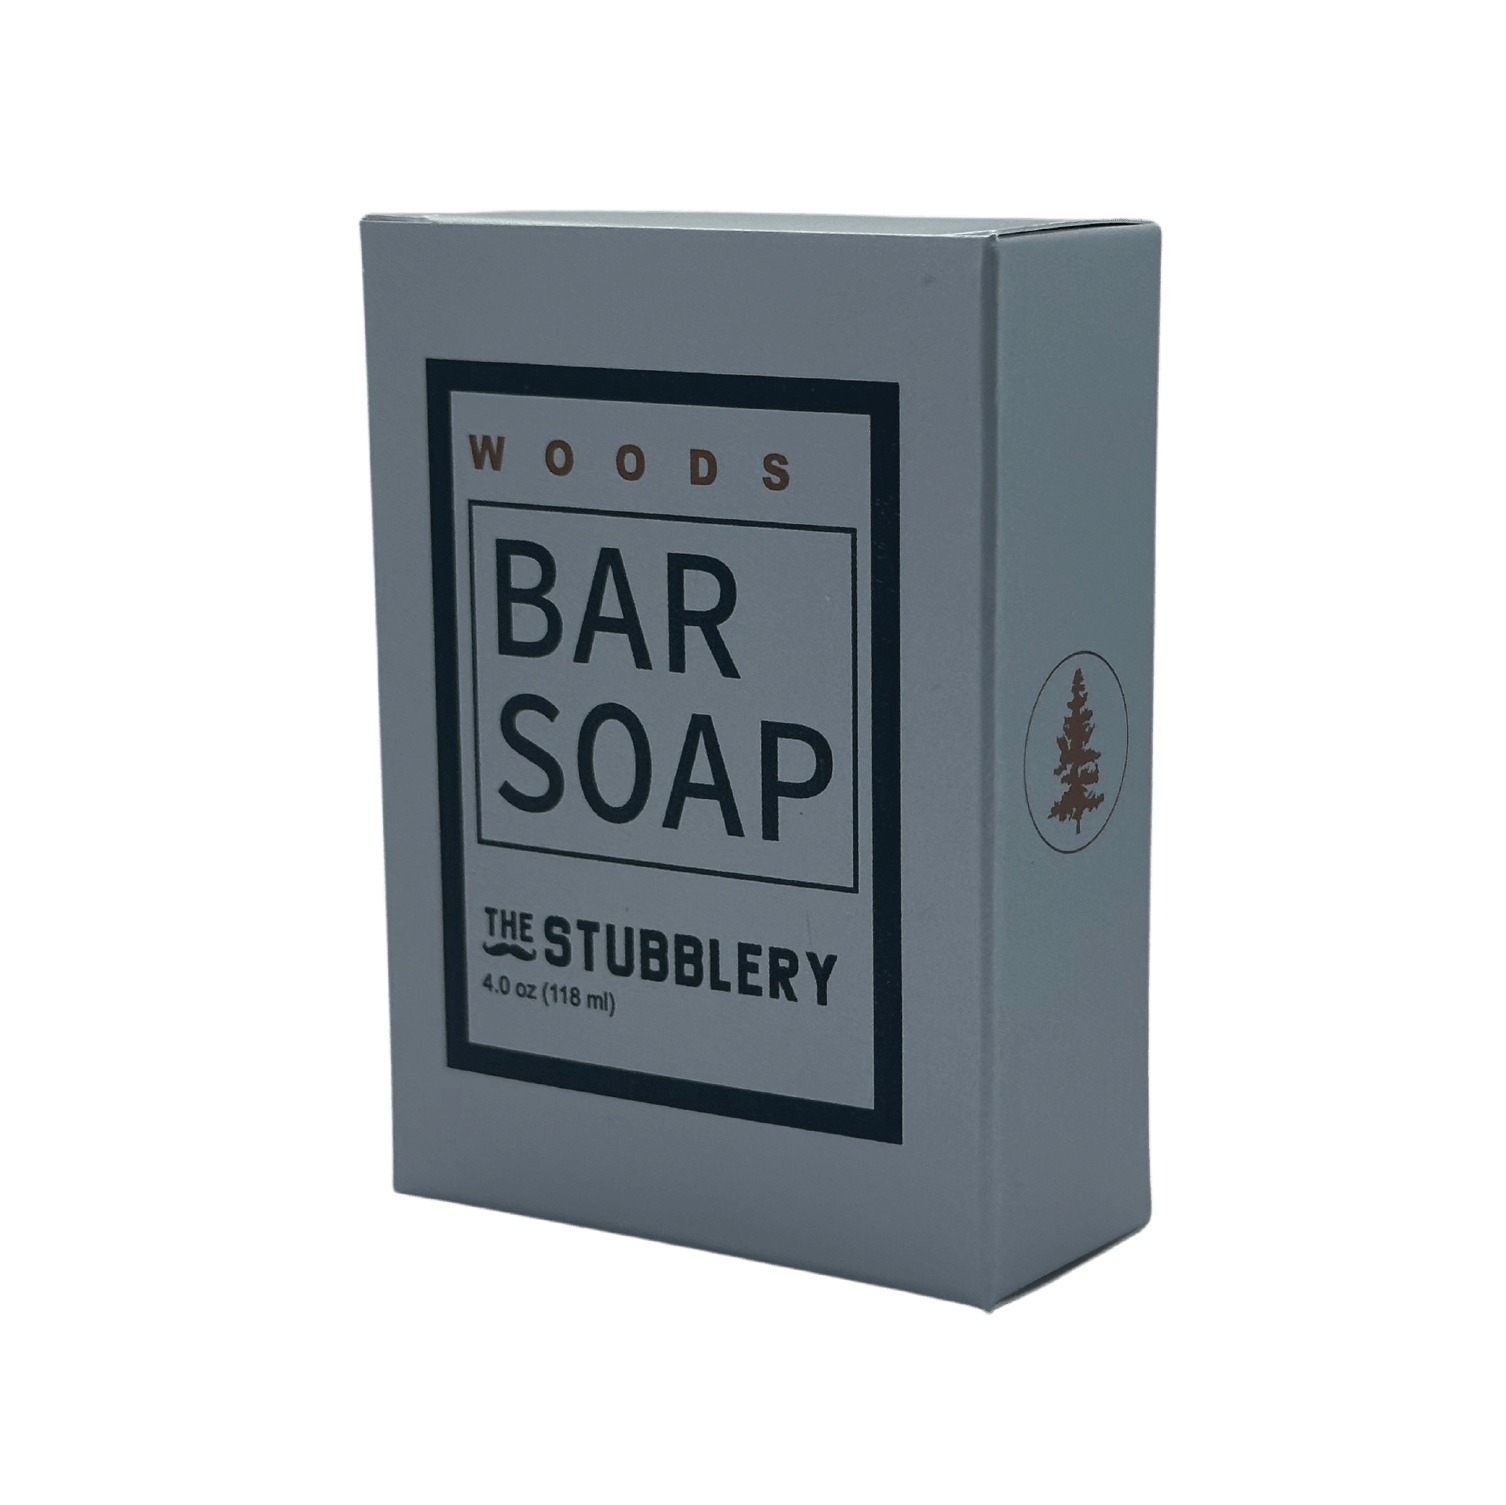 Northridge Oak - Organic Bar Soap - Spice of Life - 4oz